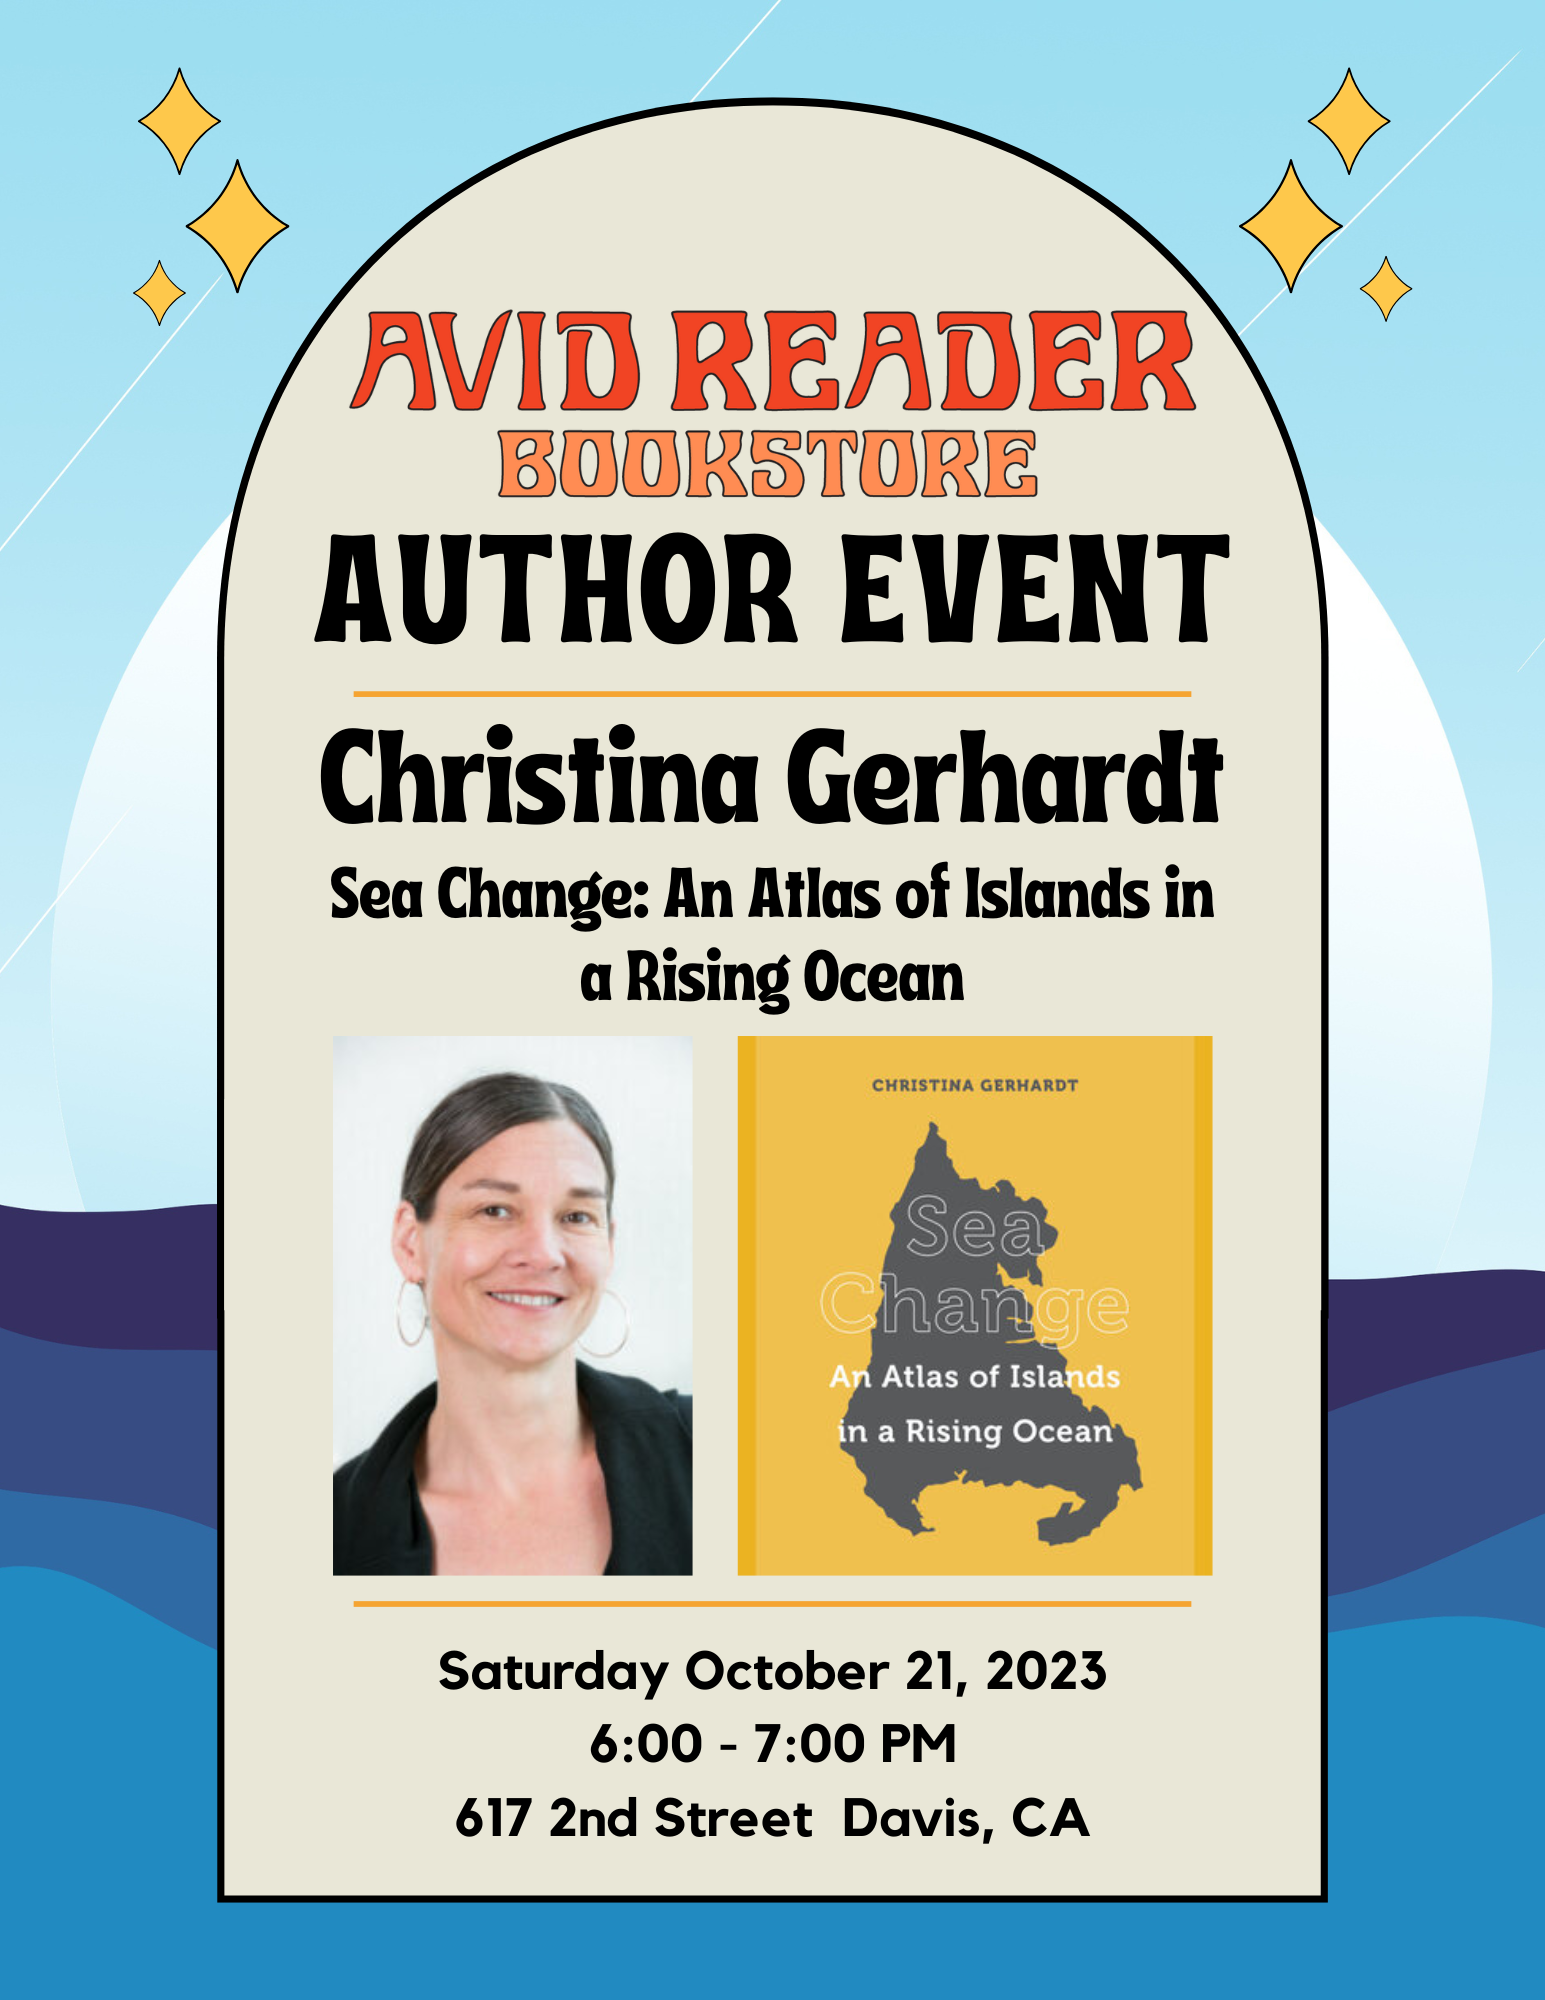 Christina Gerhardt at the Avid Reader